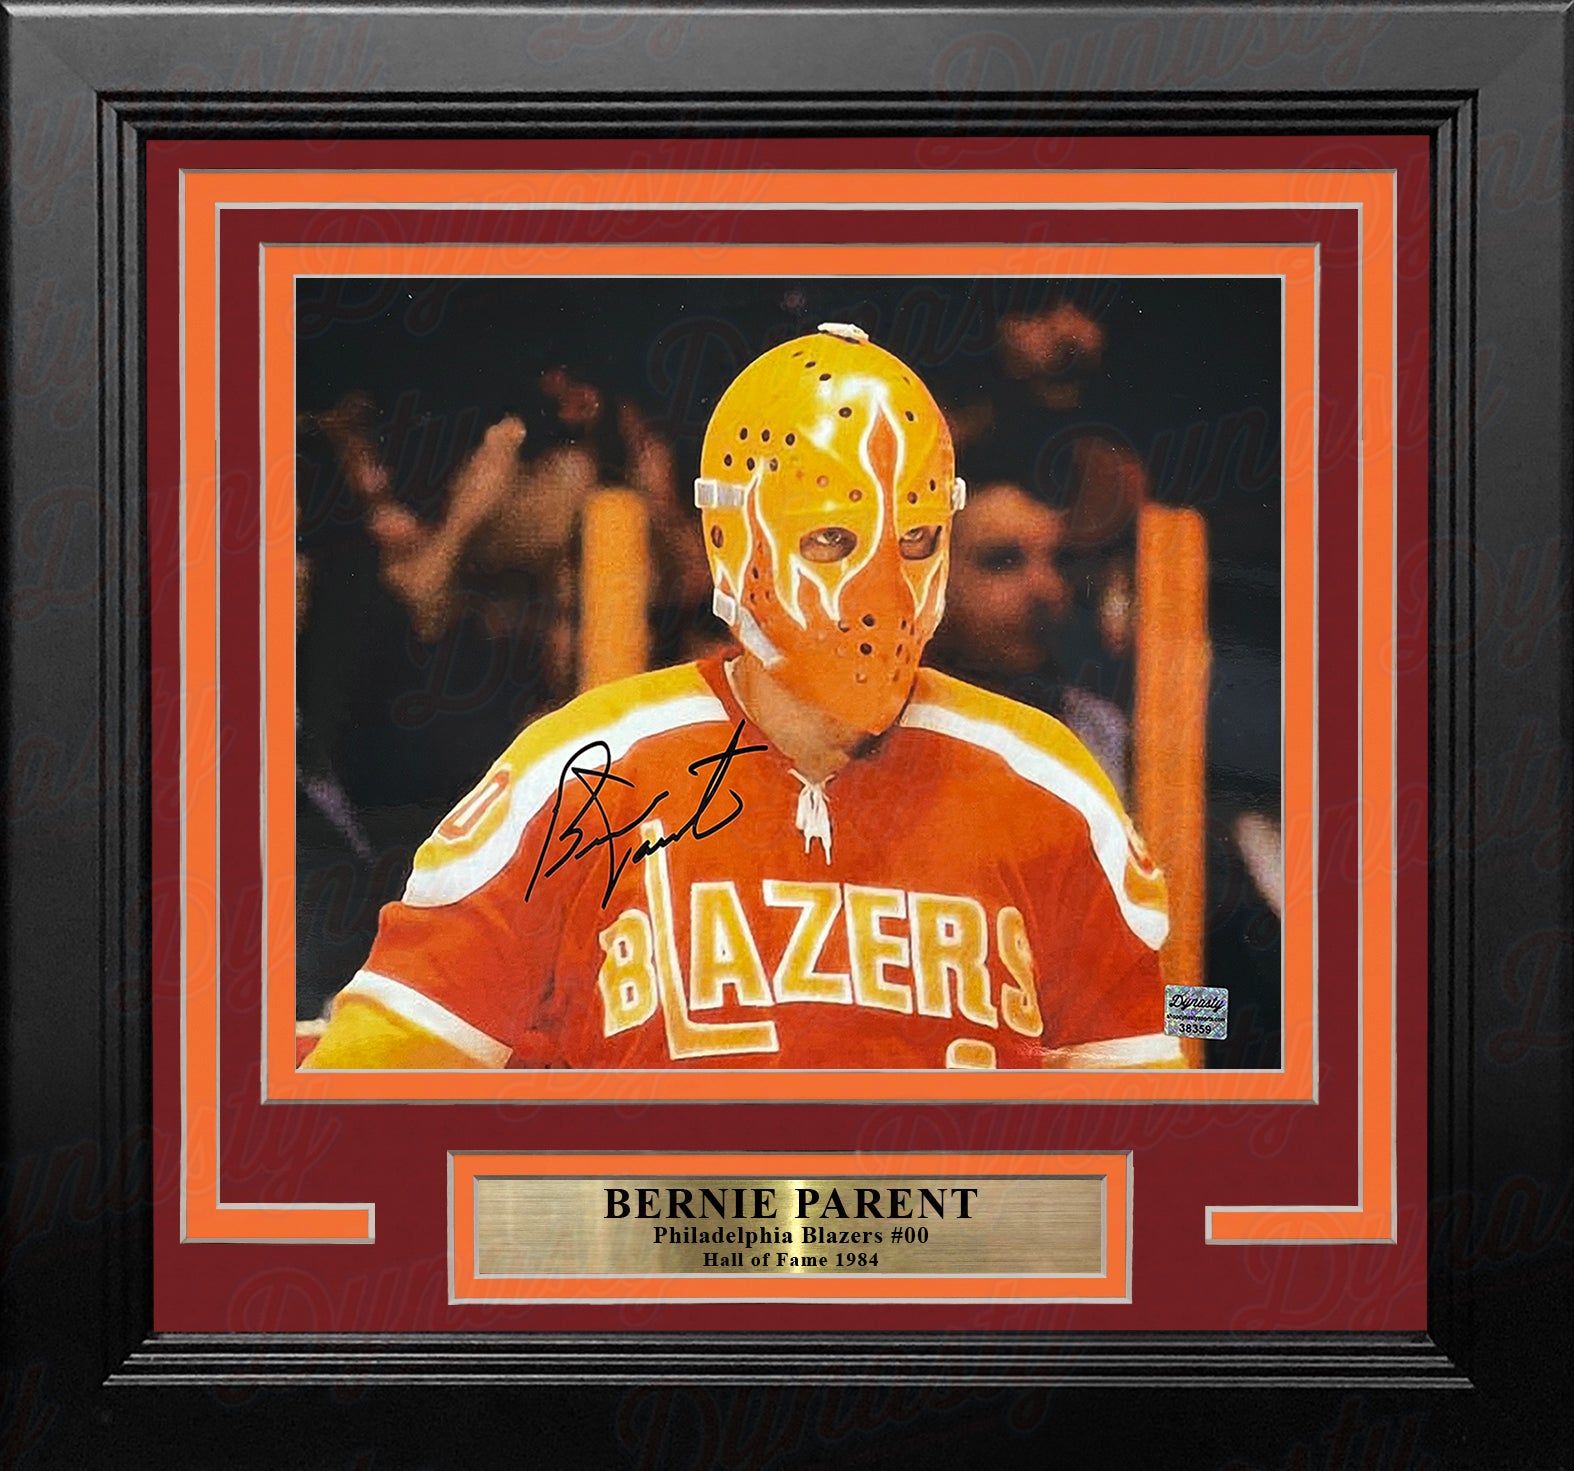 Bernie Parent Autographed Philadelphia Blazers 8" x 10" Framed Hockey Photo - Dynasty Sports & Framing 